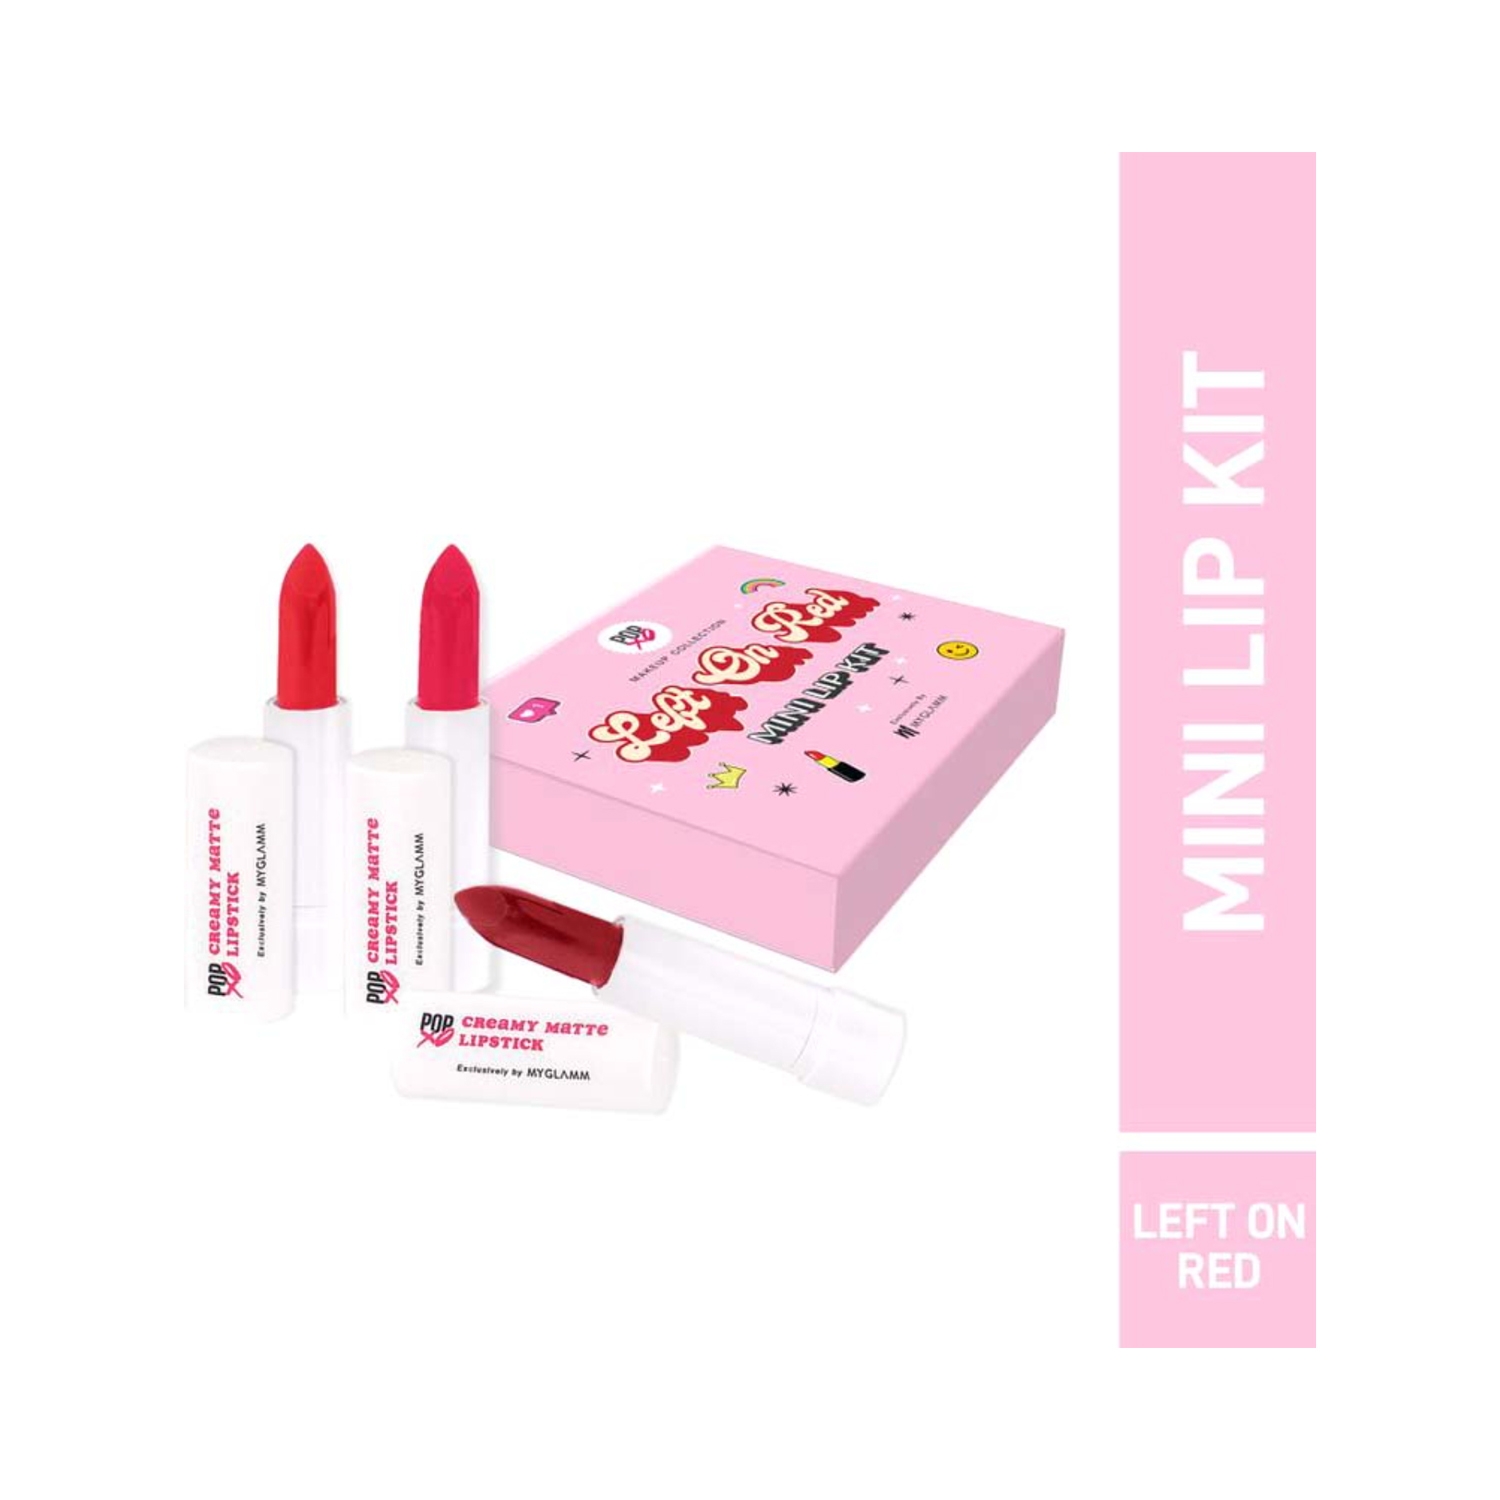 MyGlamm Popxo Makeup Mini Lip Kit - Left On Red (3Pcs)